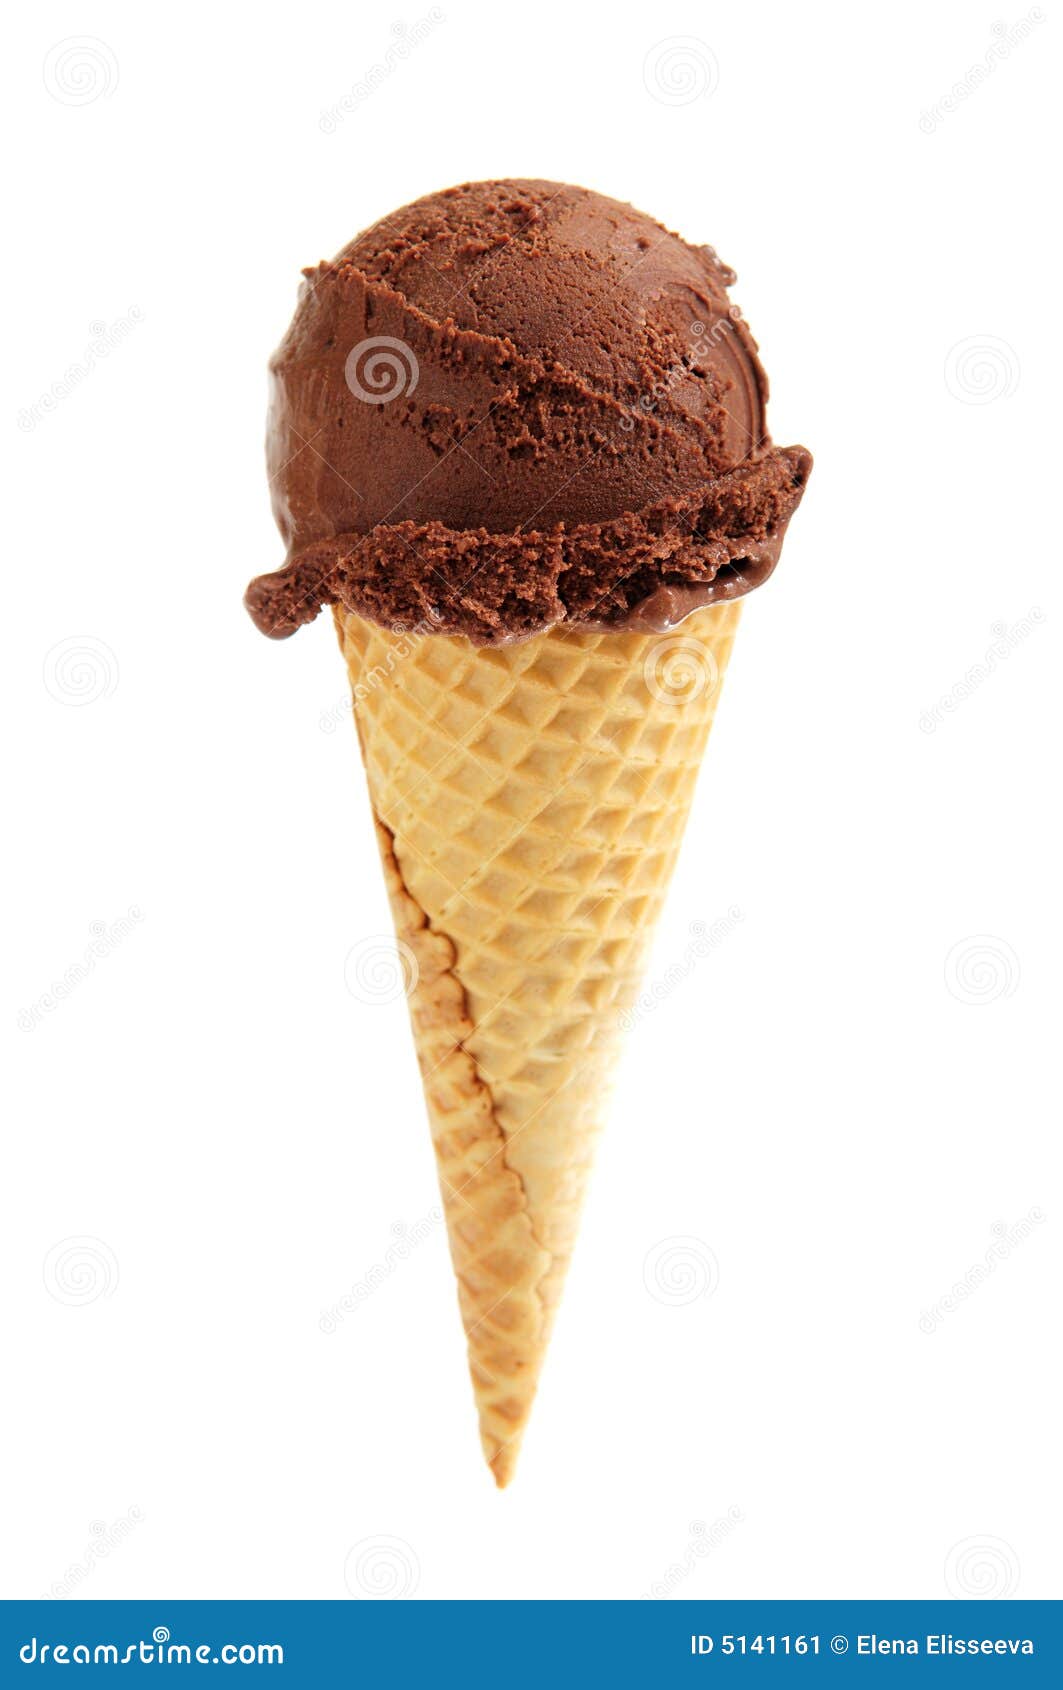 chocolate-ice-cream-in-a-sugar-cone-stock-image-image-of-scoop